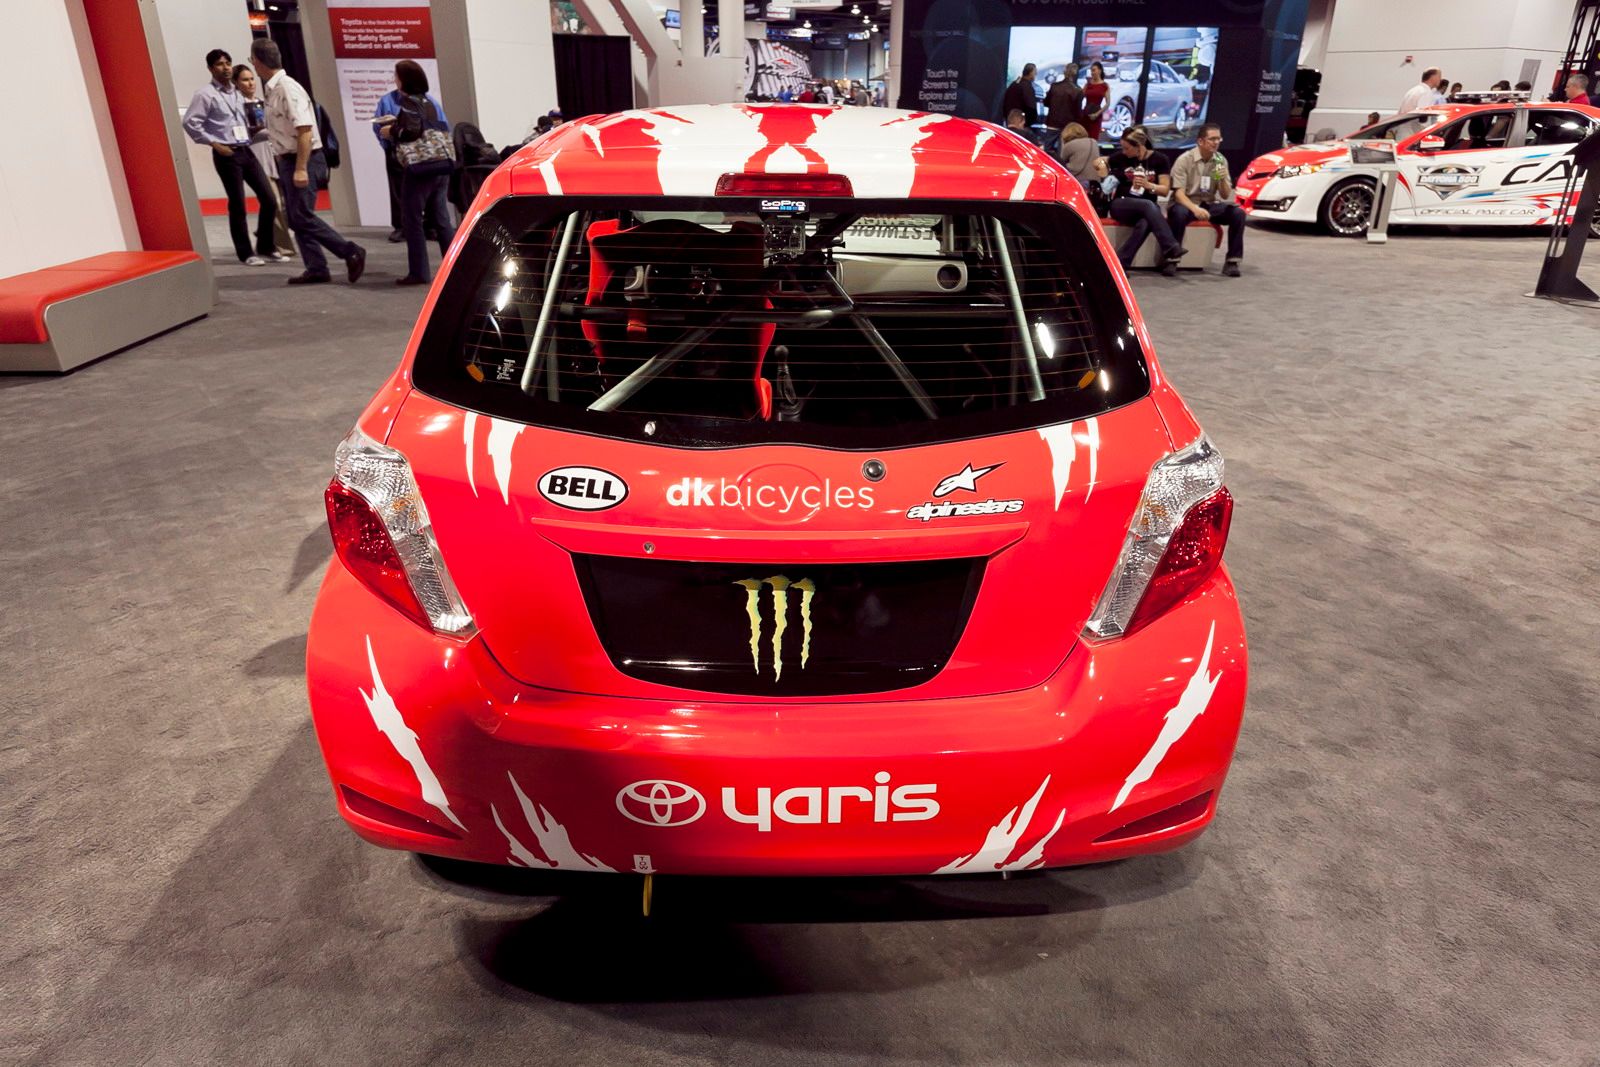 2012 Toyota Yaris B-Spec Club Racer